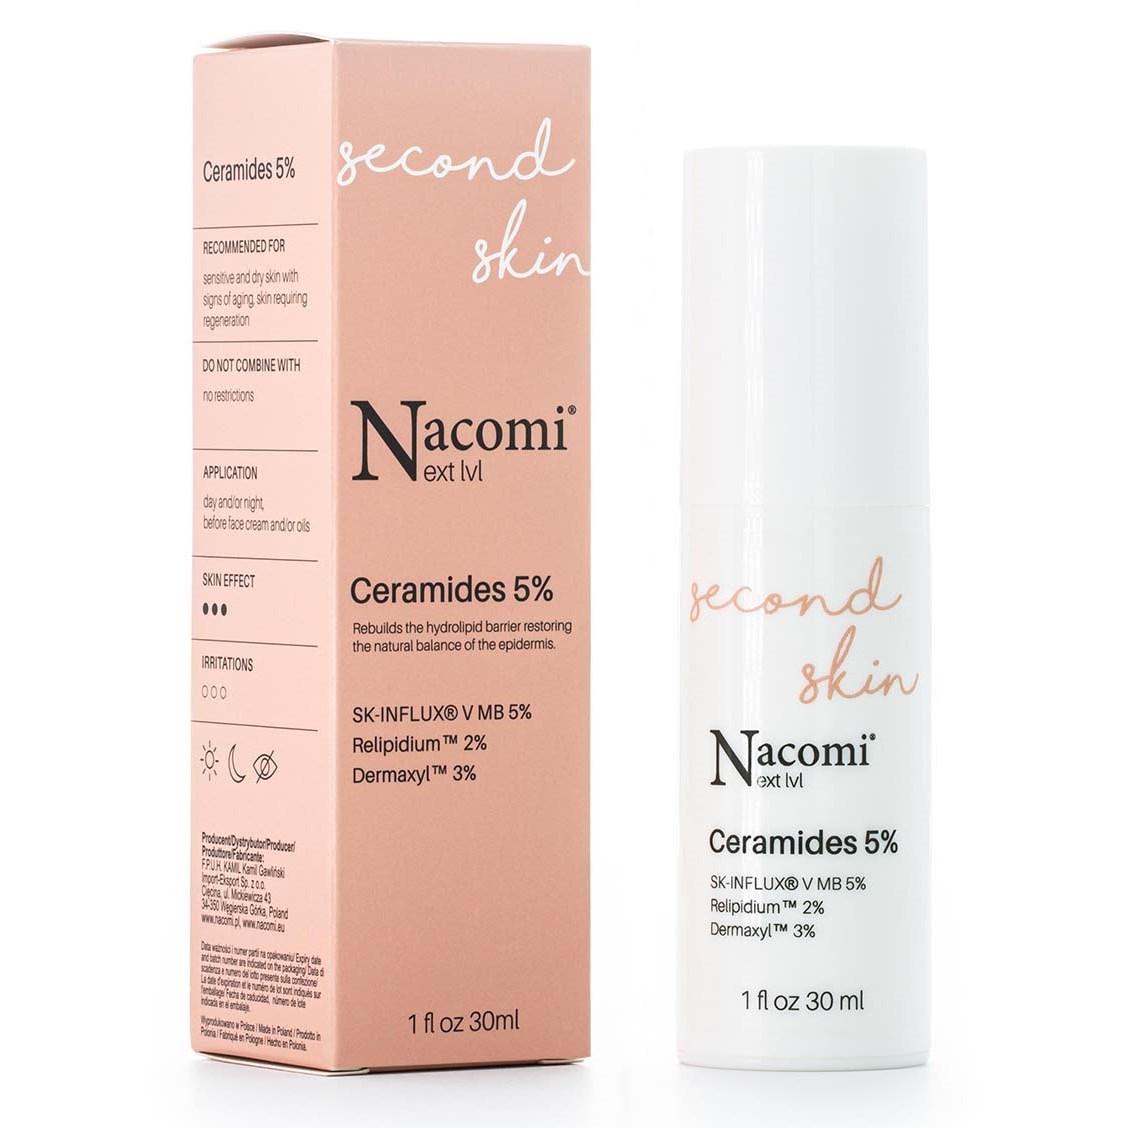 Nacomi Second Skin Ceramides 5% 30 ml